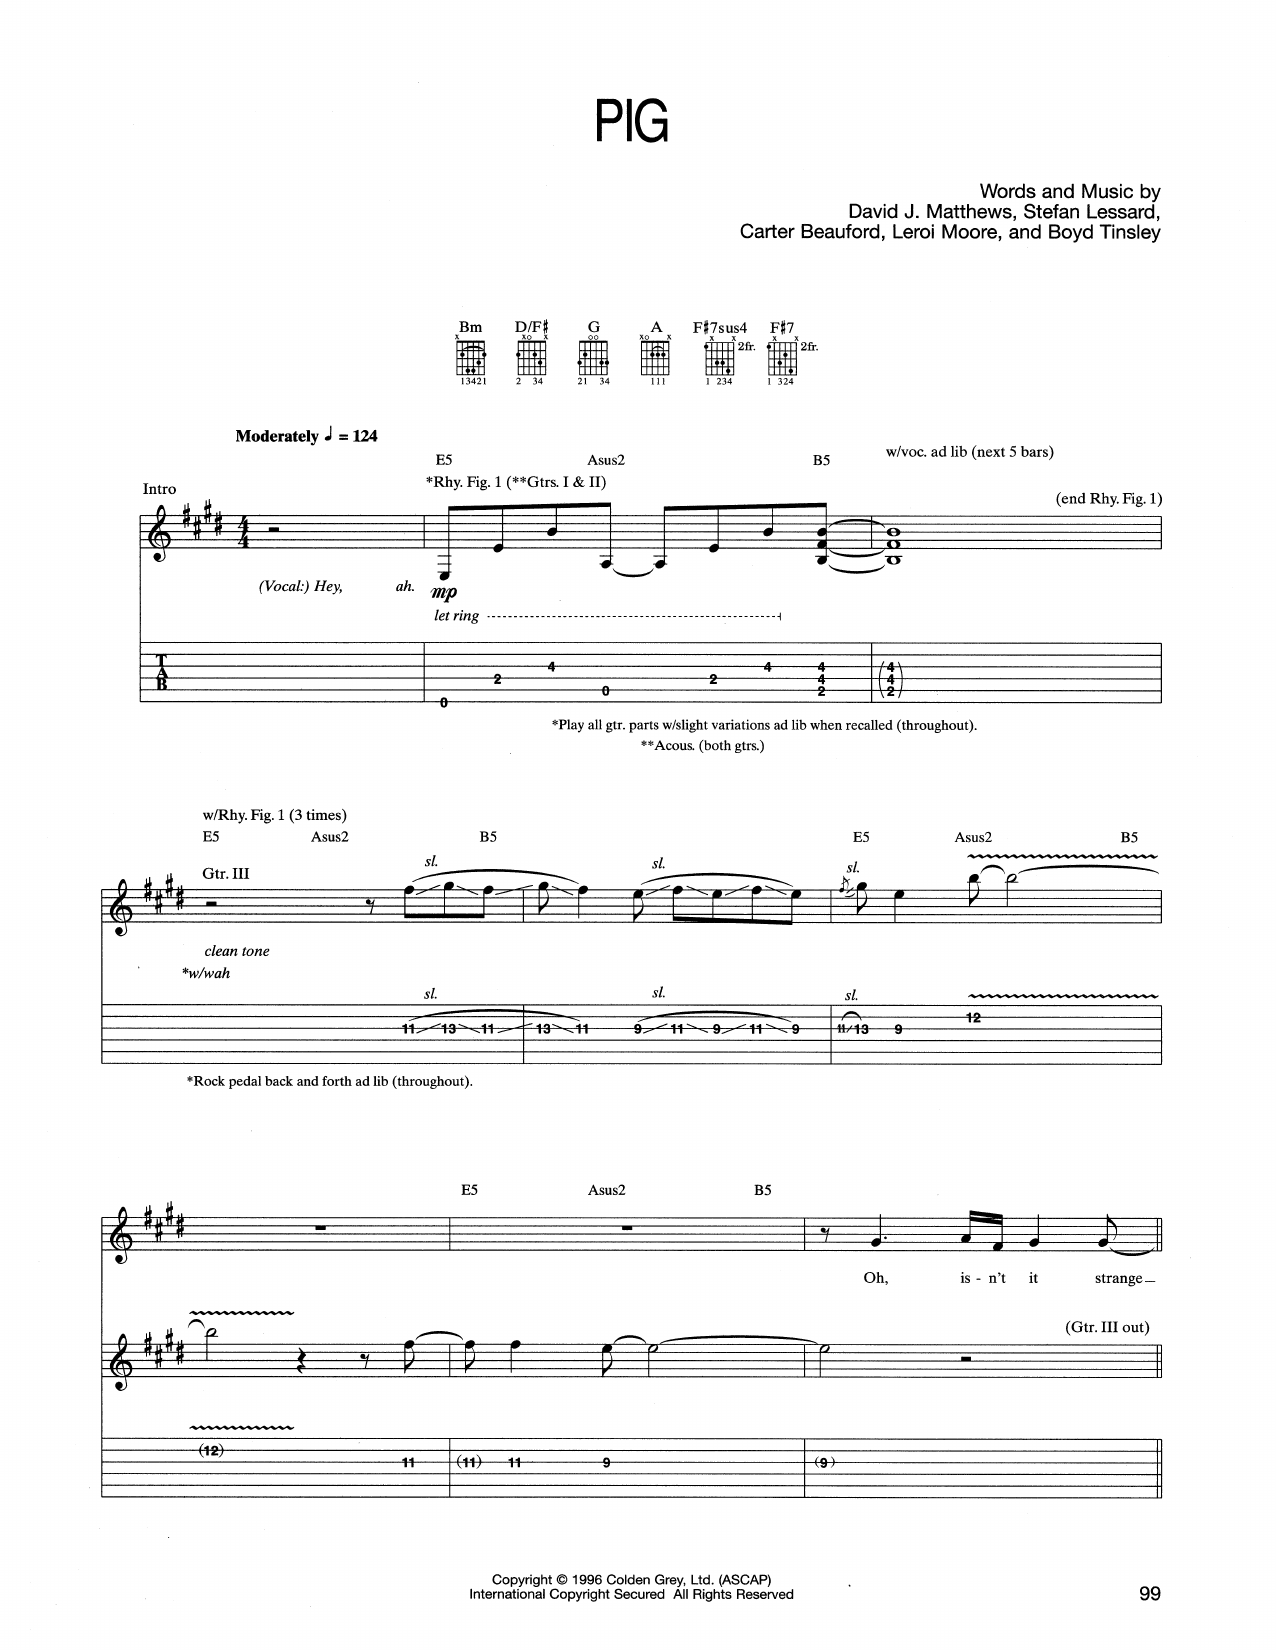 Dave Matthews Band Pig Sheet Music Notes & Chords for Guitar Tab - Download or Print PDF